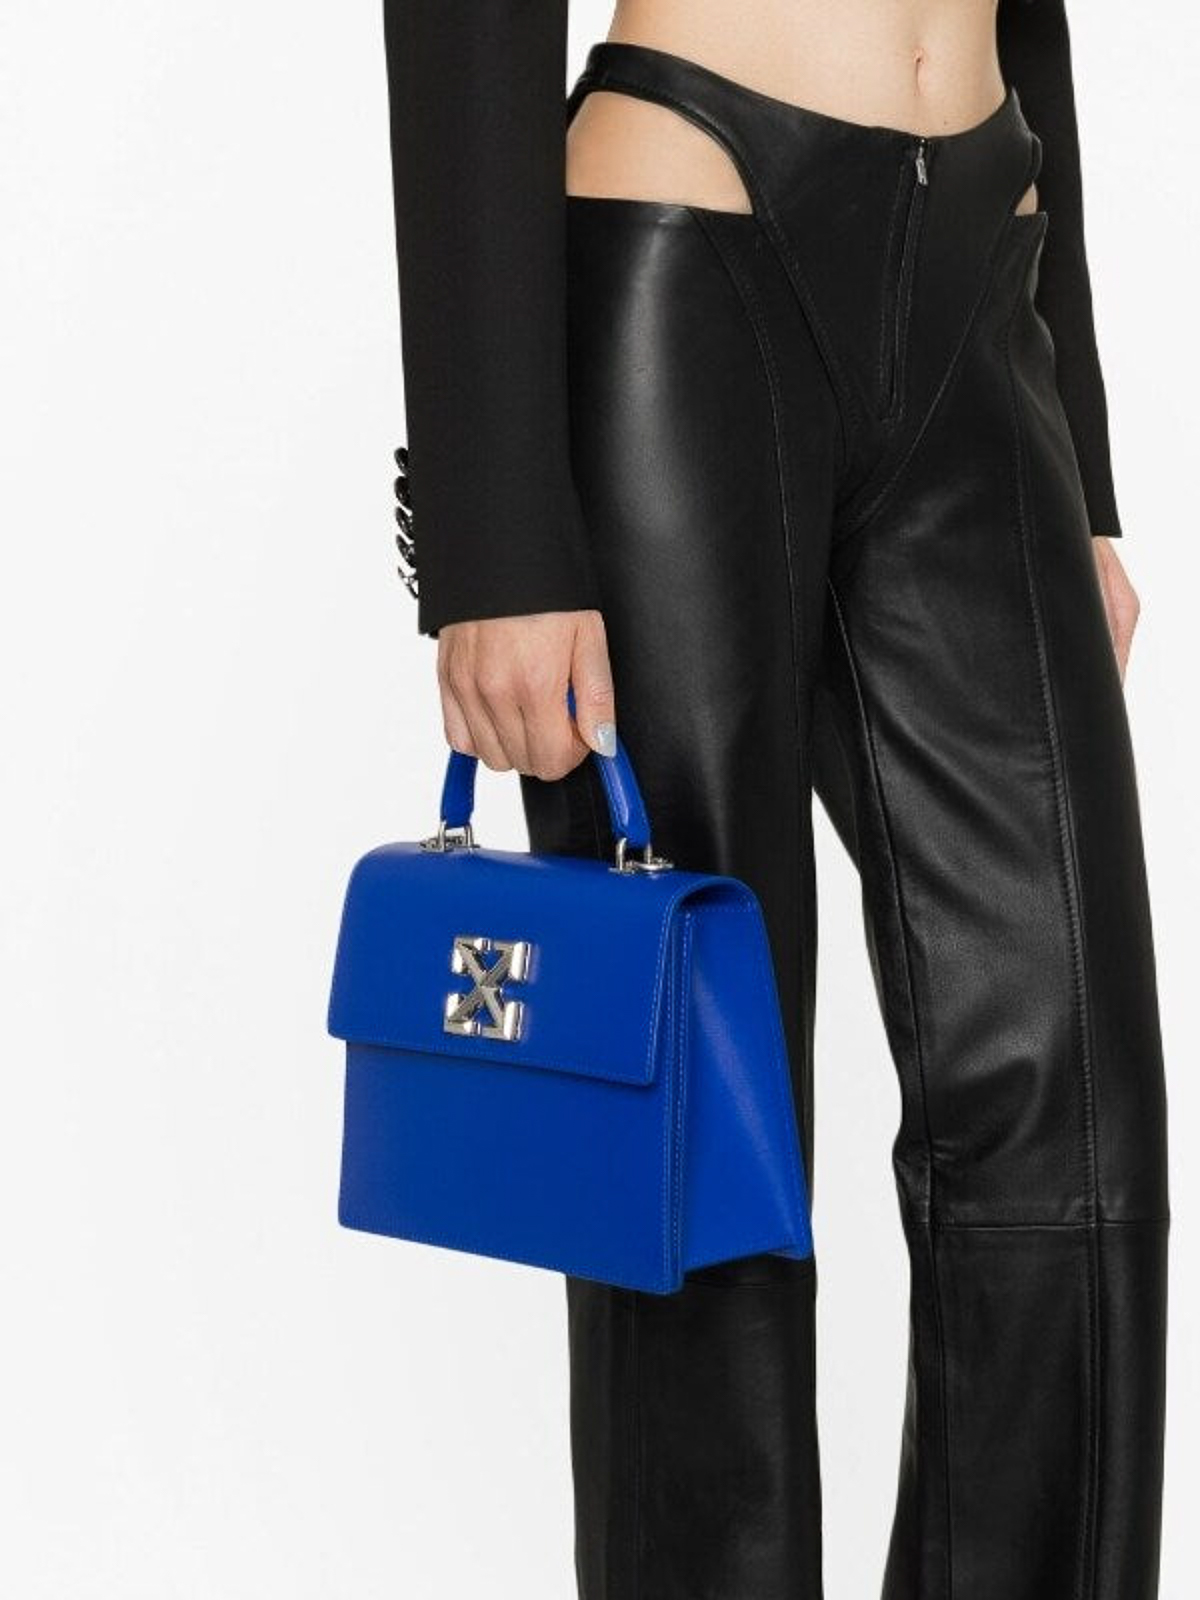 Jitney Leather Shoulder Bag in Blue - Off White